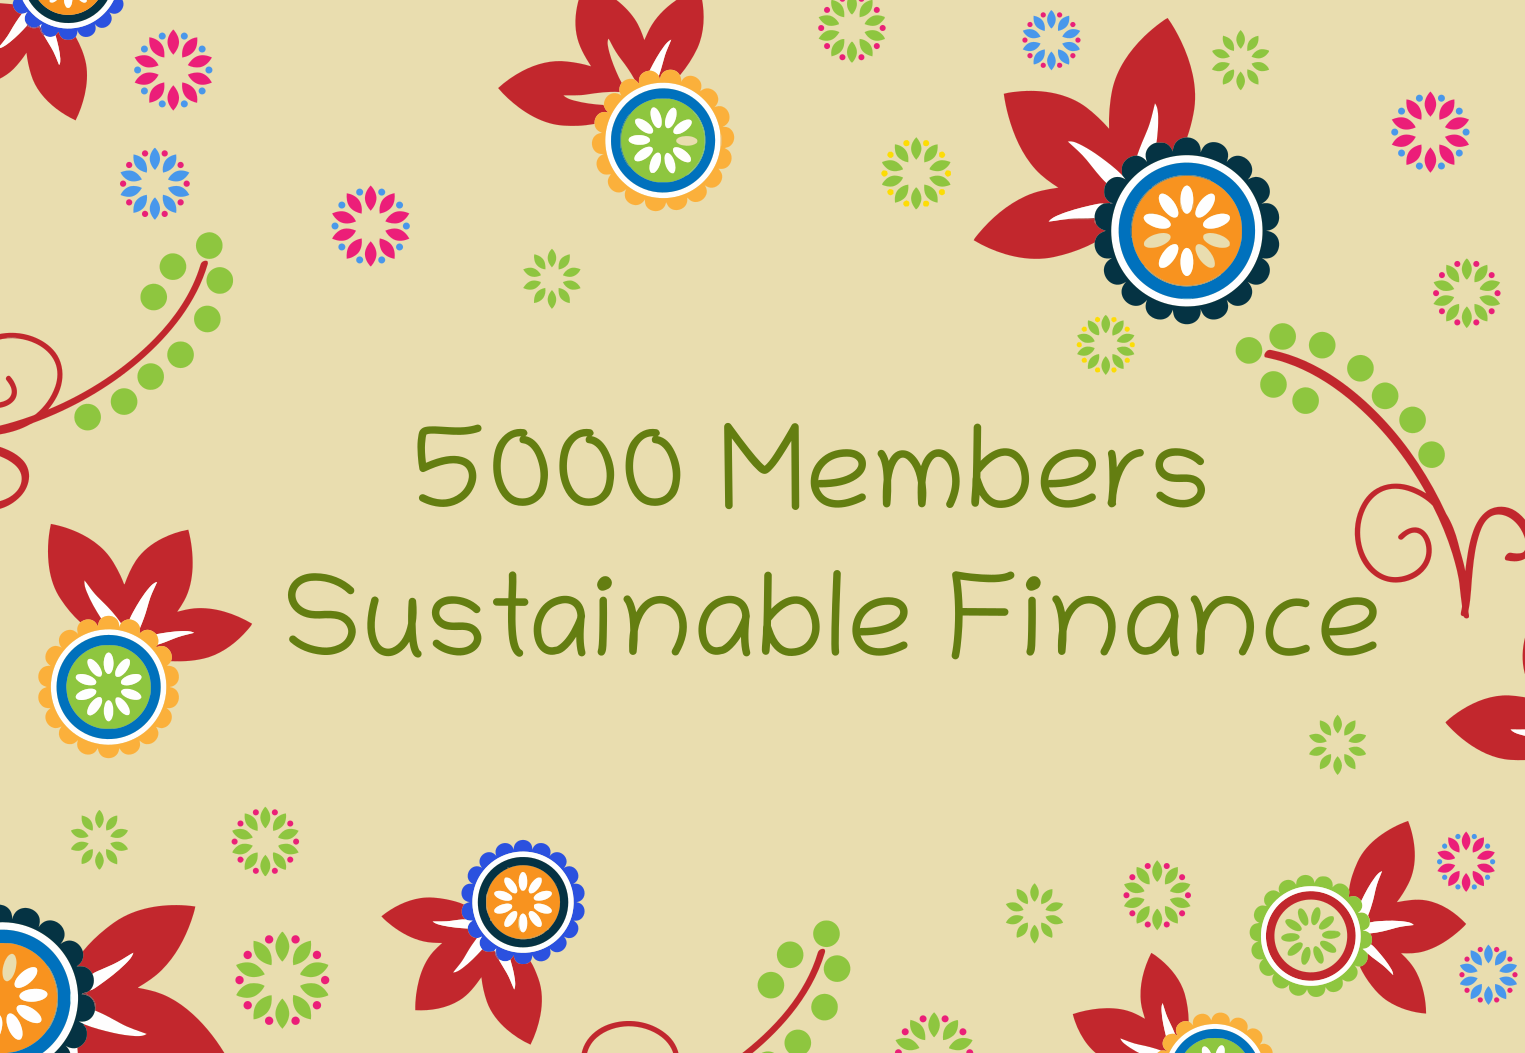 5000 Members of Sustainable Finance Subreddit